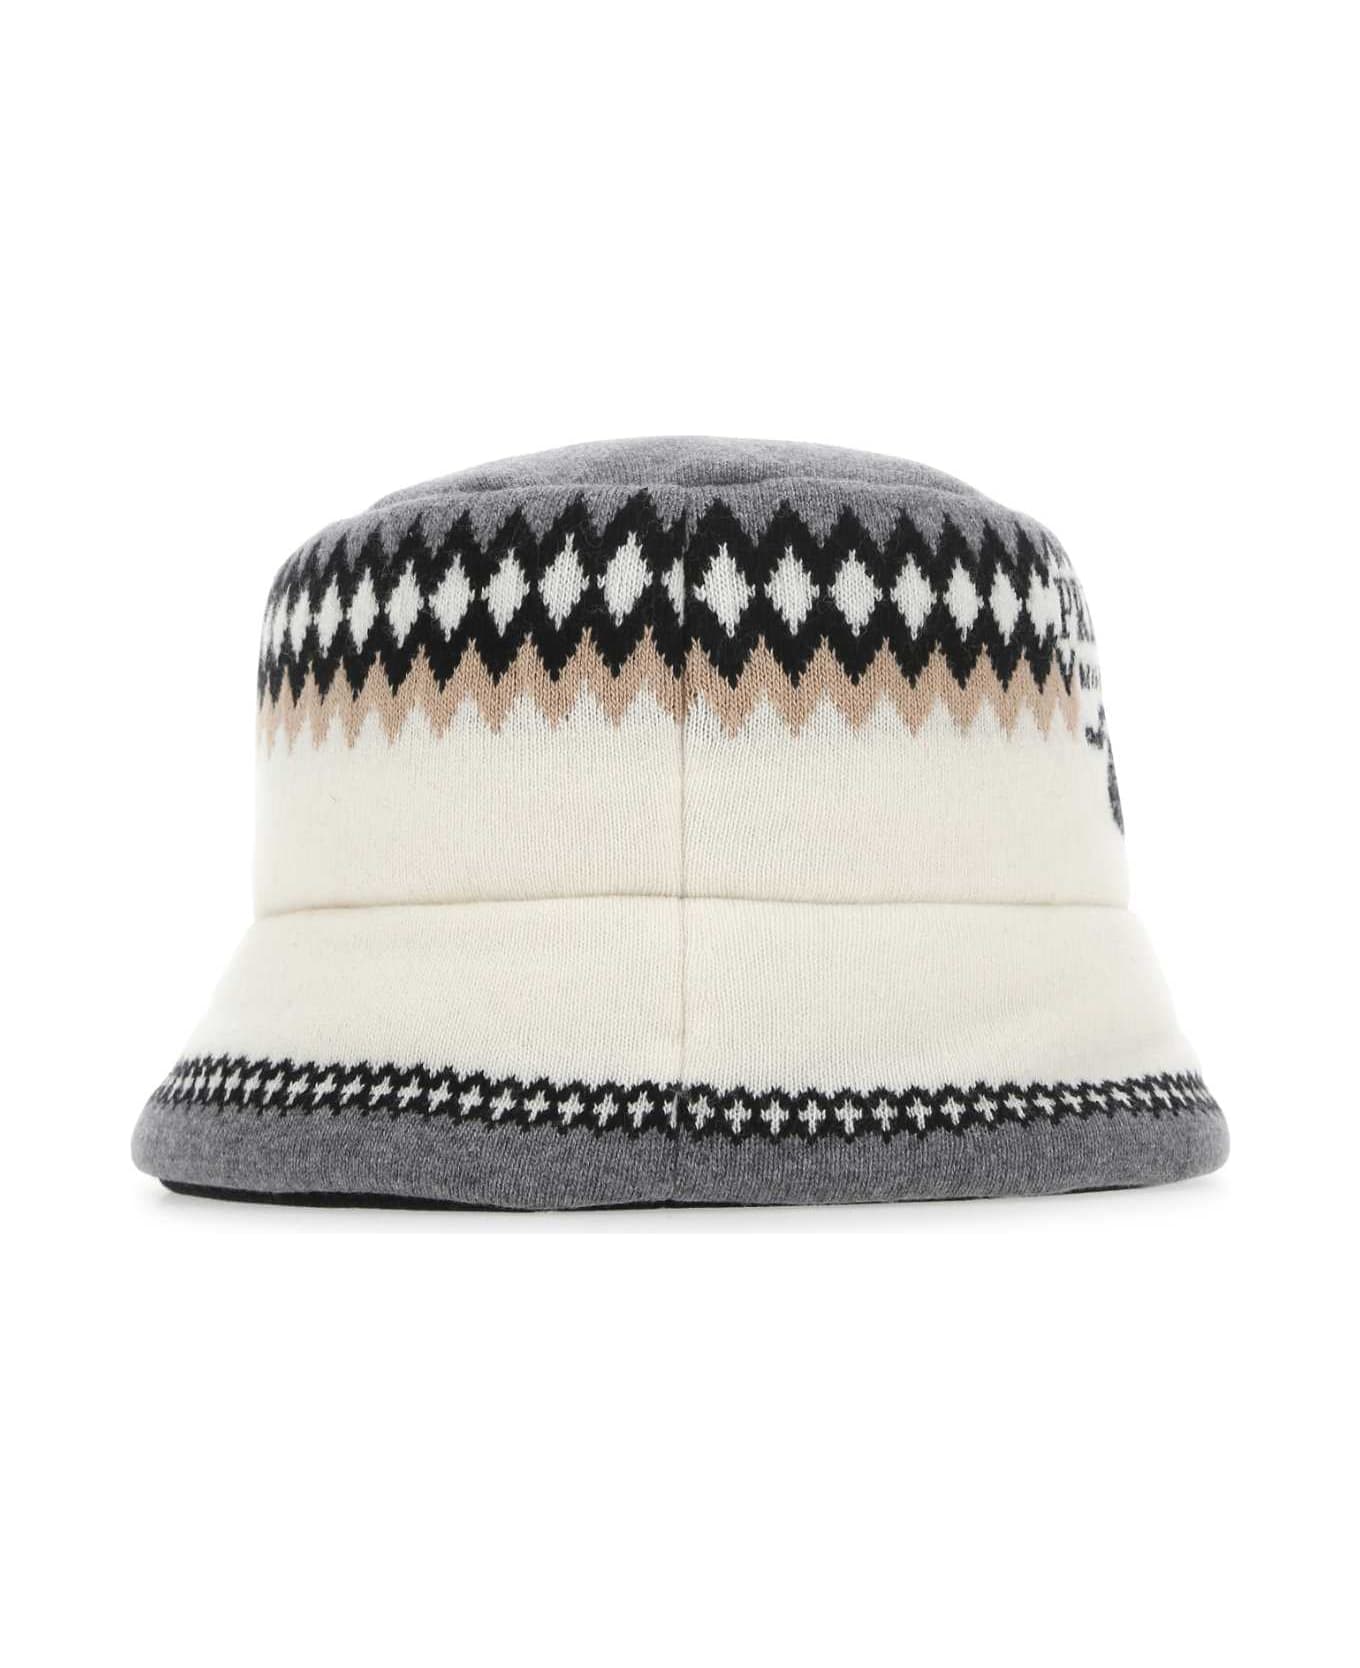 Prada Embroidered Wool Blend Hat - CAMMELLO